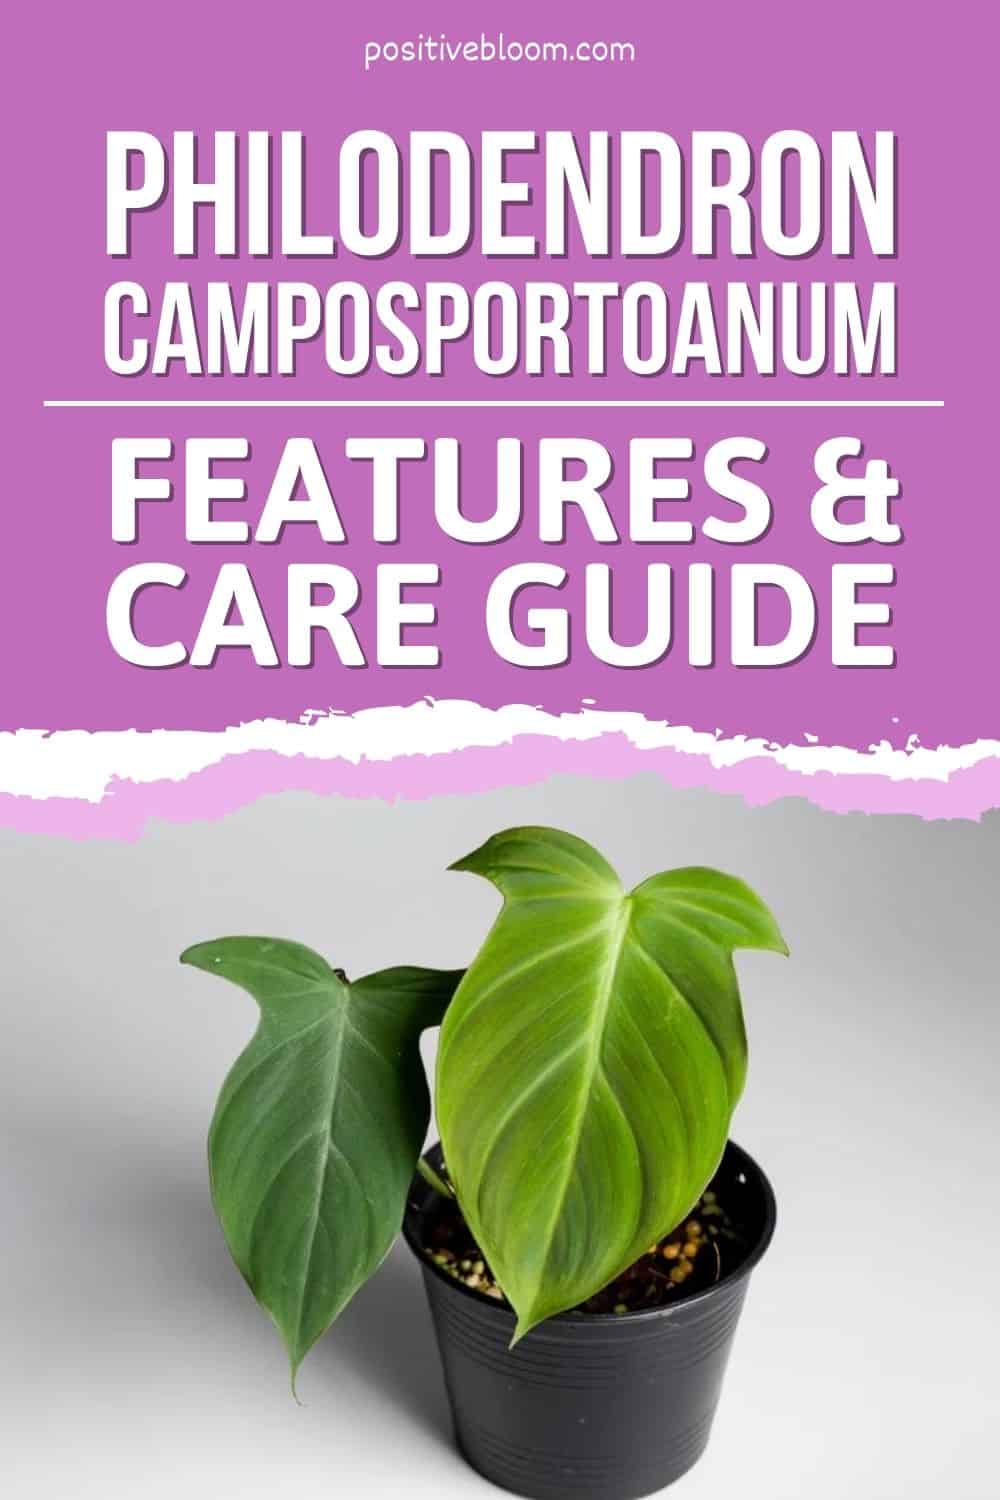 Philodendron Camposportoanum Features & Care Guide Pinterest